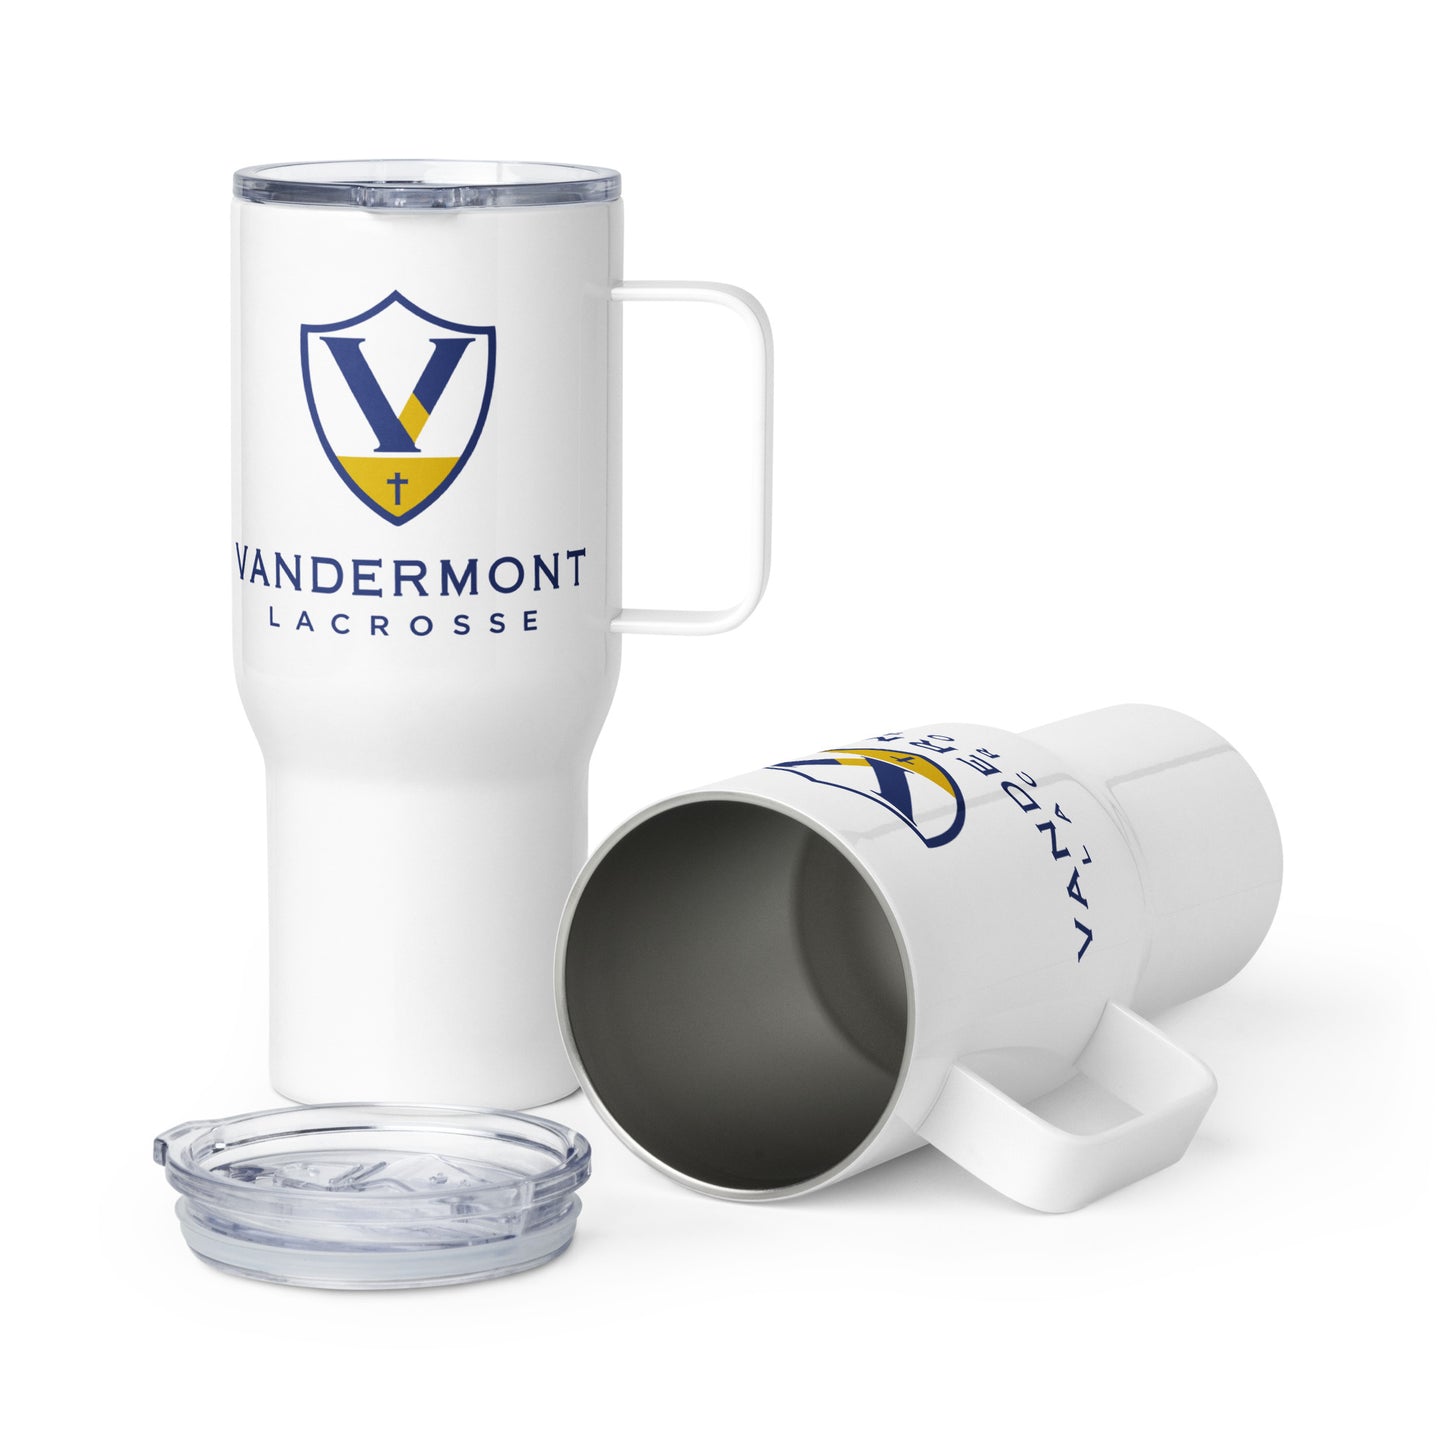 Vandermont - Travel mug with a handle